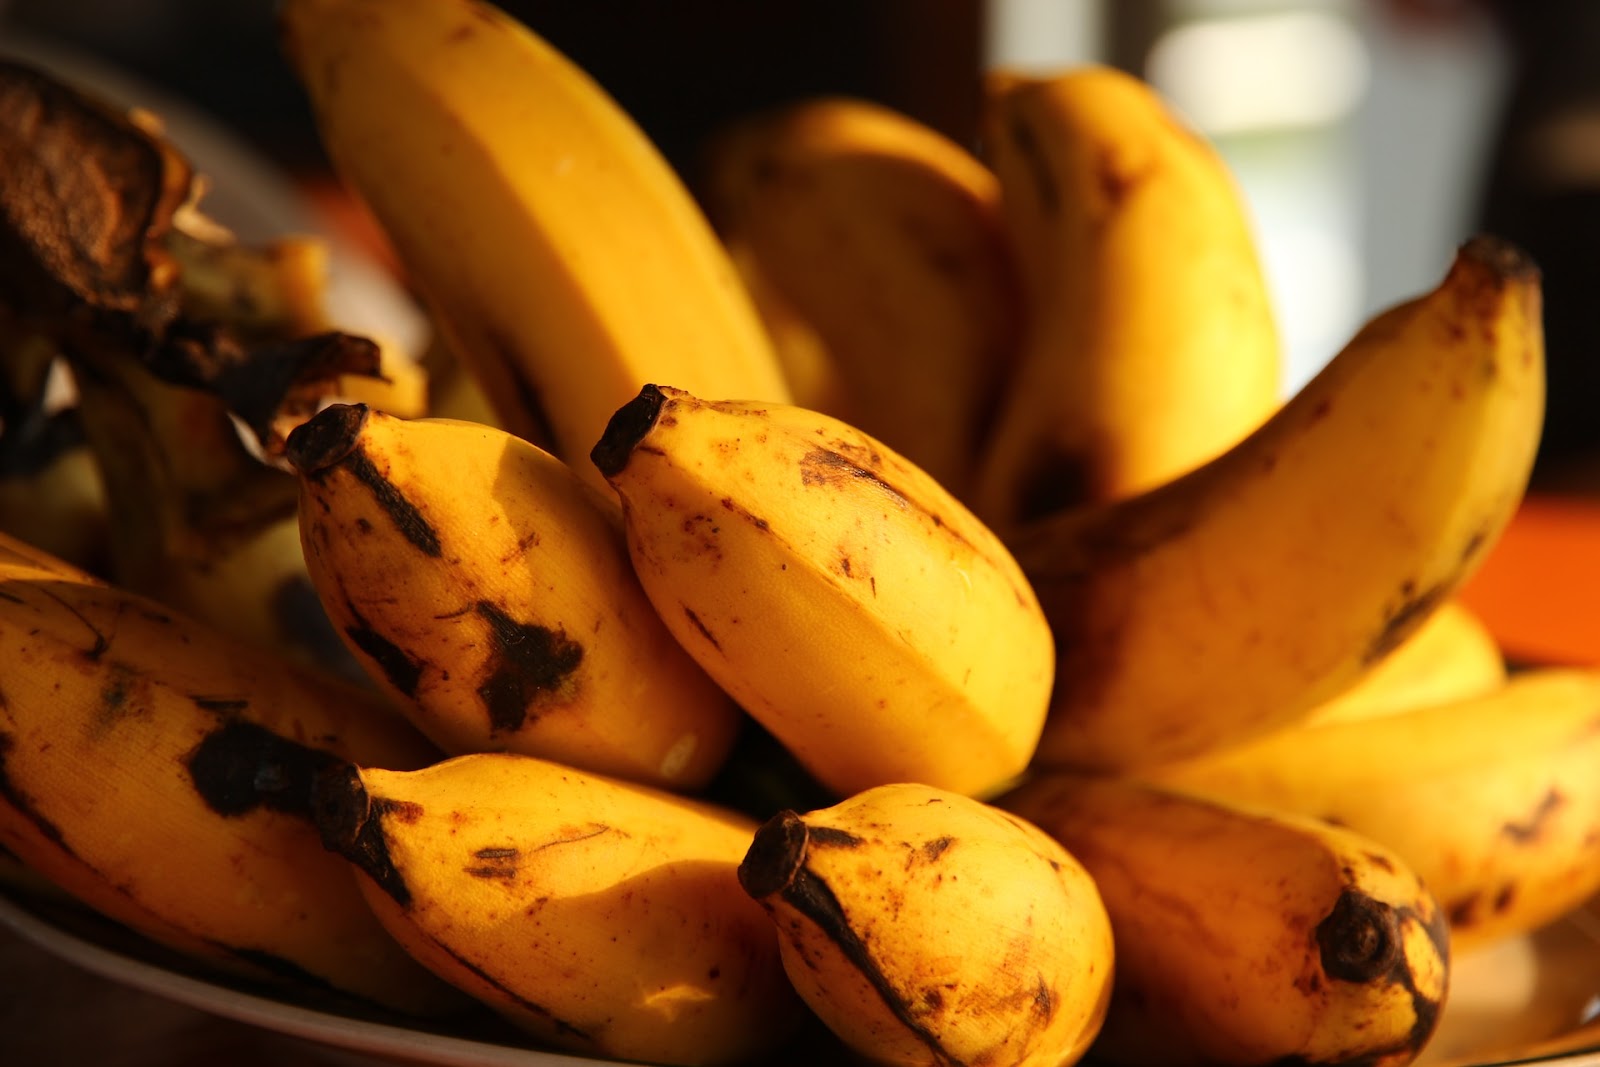 Closeup of ripe bananas